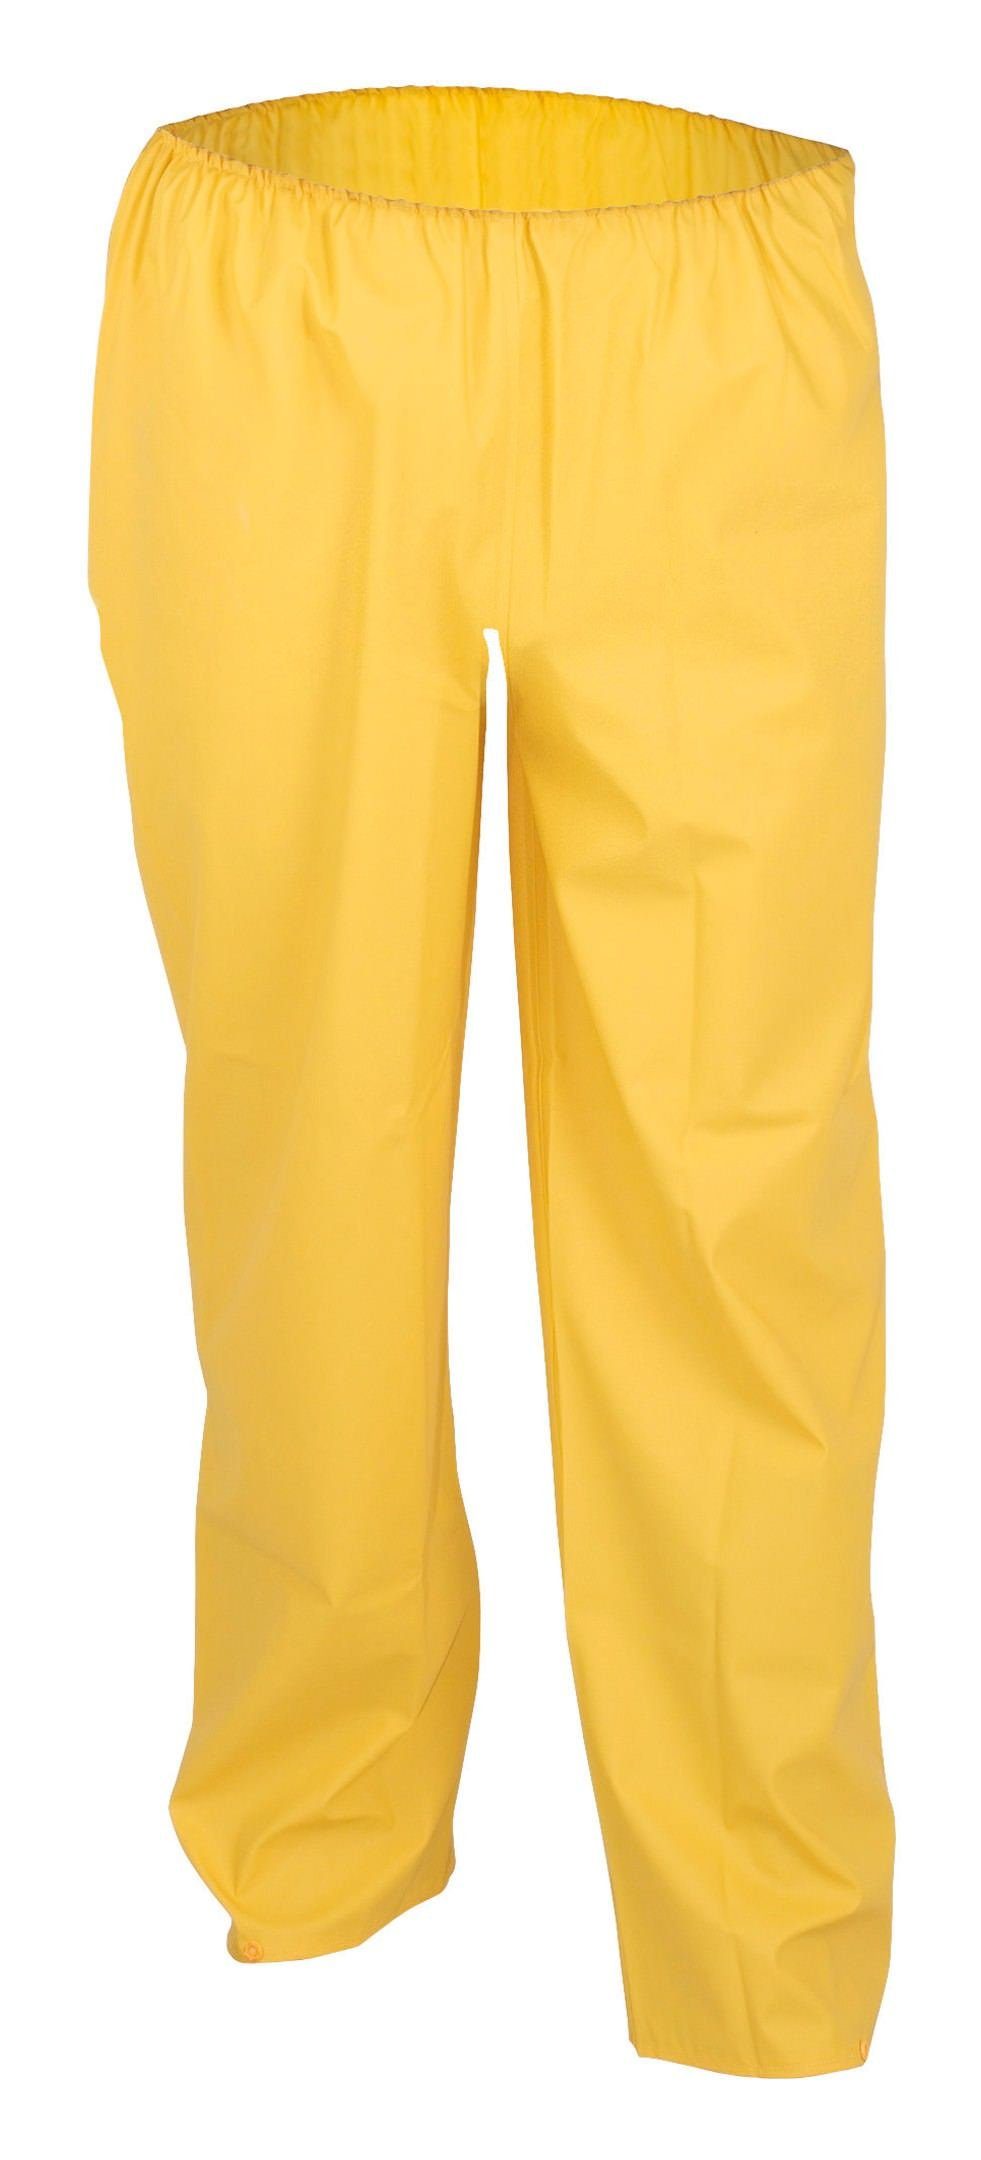 ASATEX Regenhose Bundhose PU-Stretch Größe 1 / 50-52 gelb